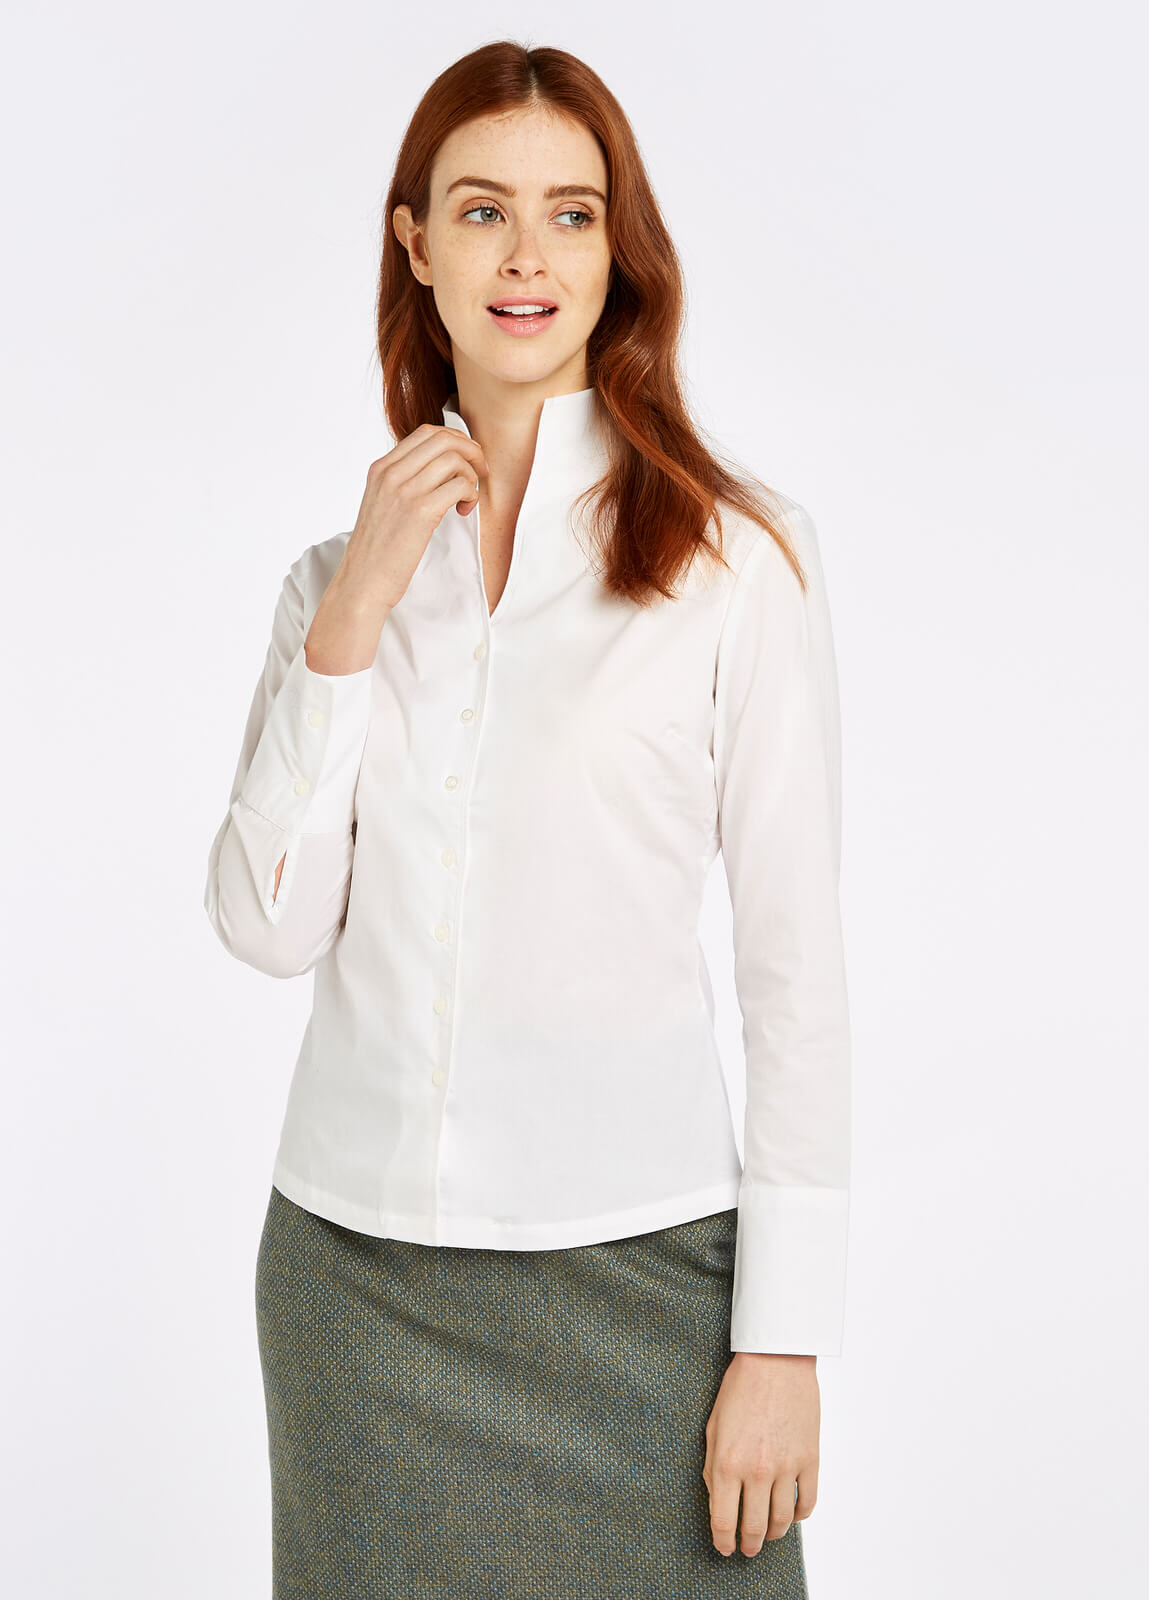 - Beautifully USA Women of Dubarry | designed Dubarry Ireland Shirts for